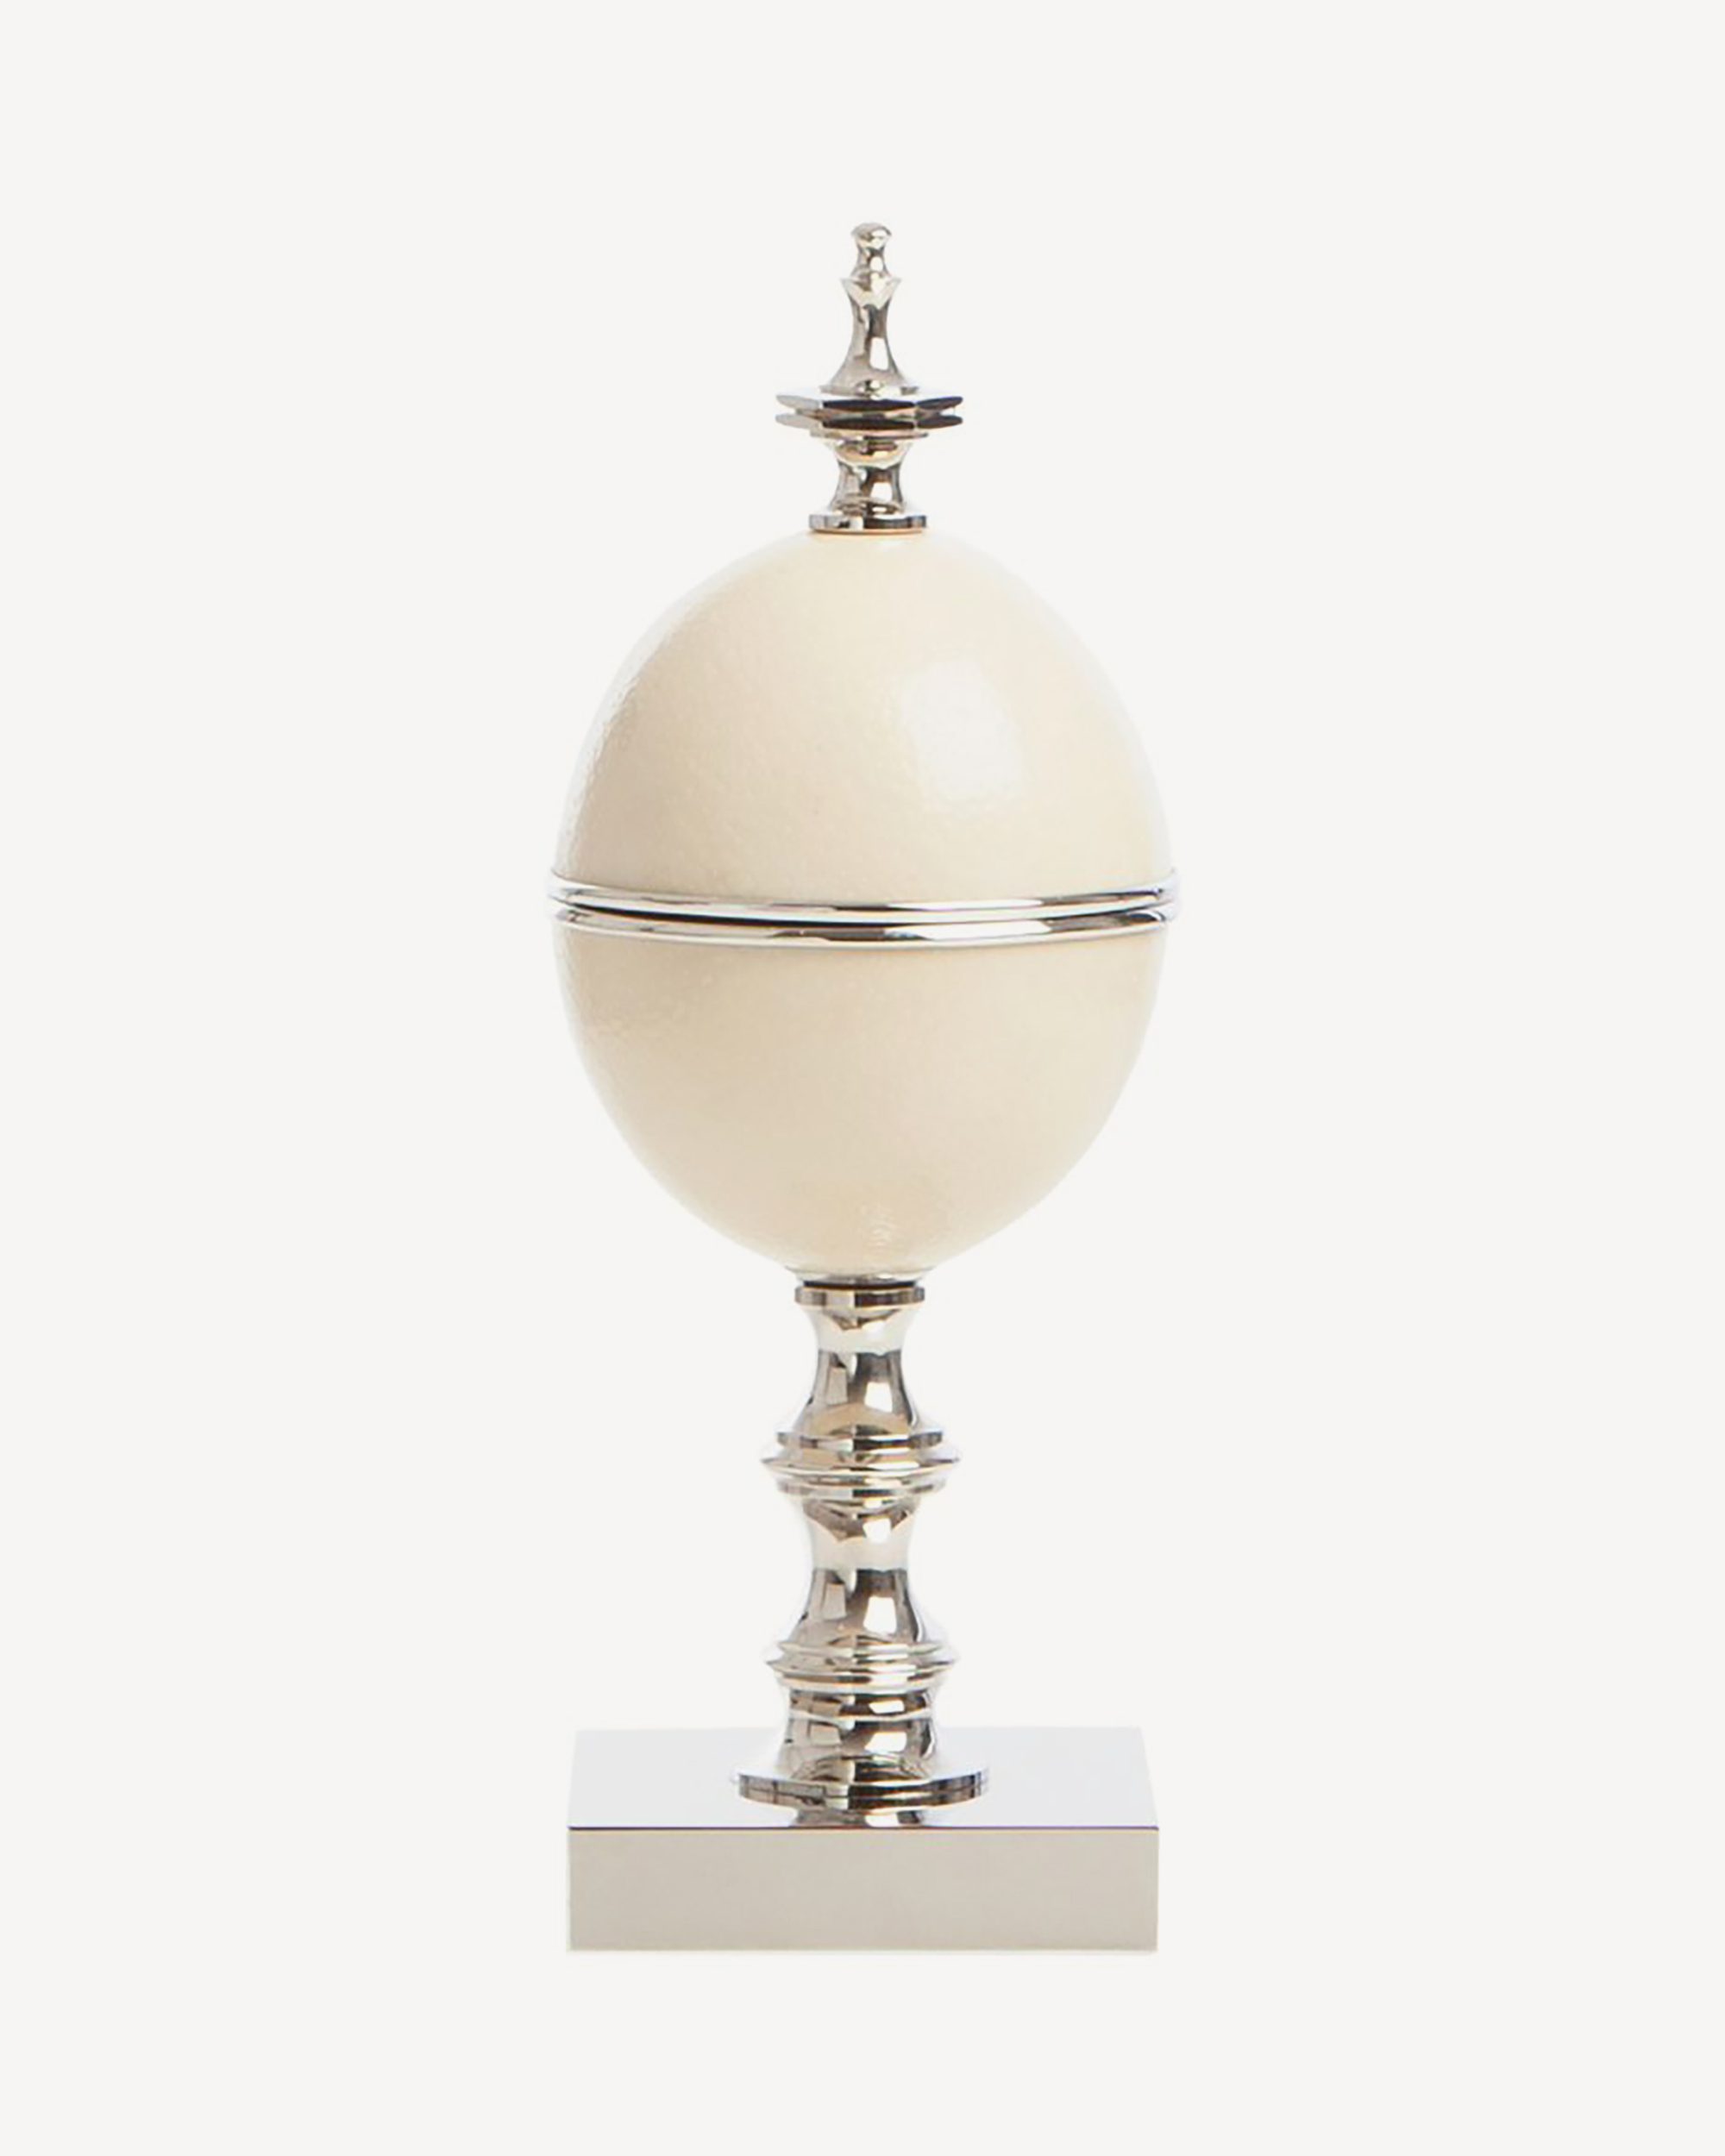 Decorative Ostrich Egg Box on plated brass base